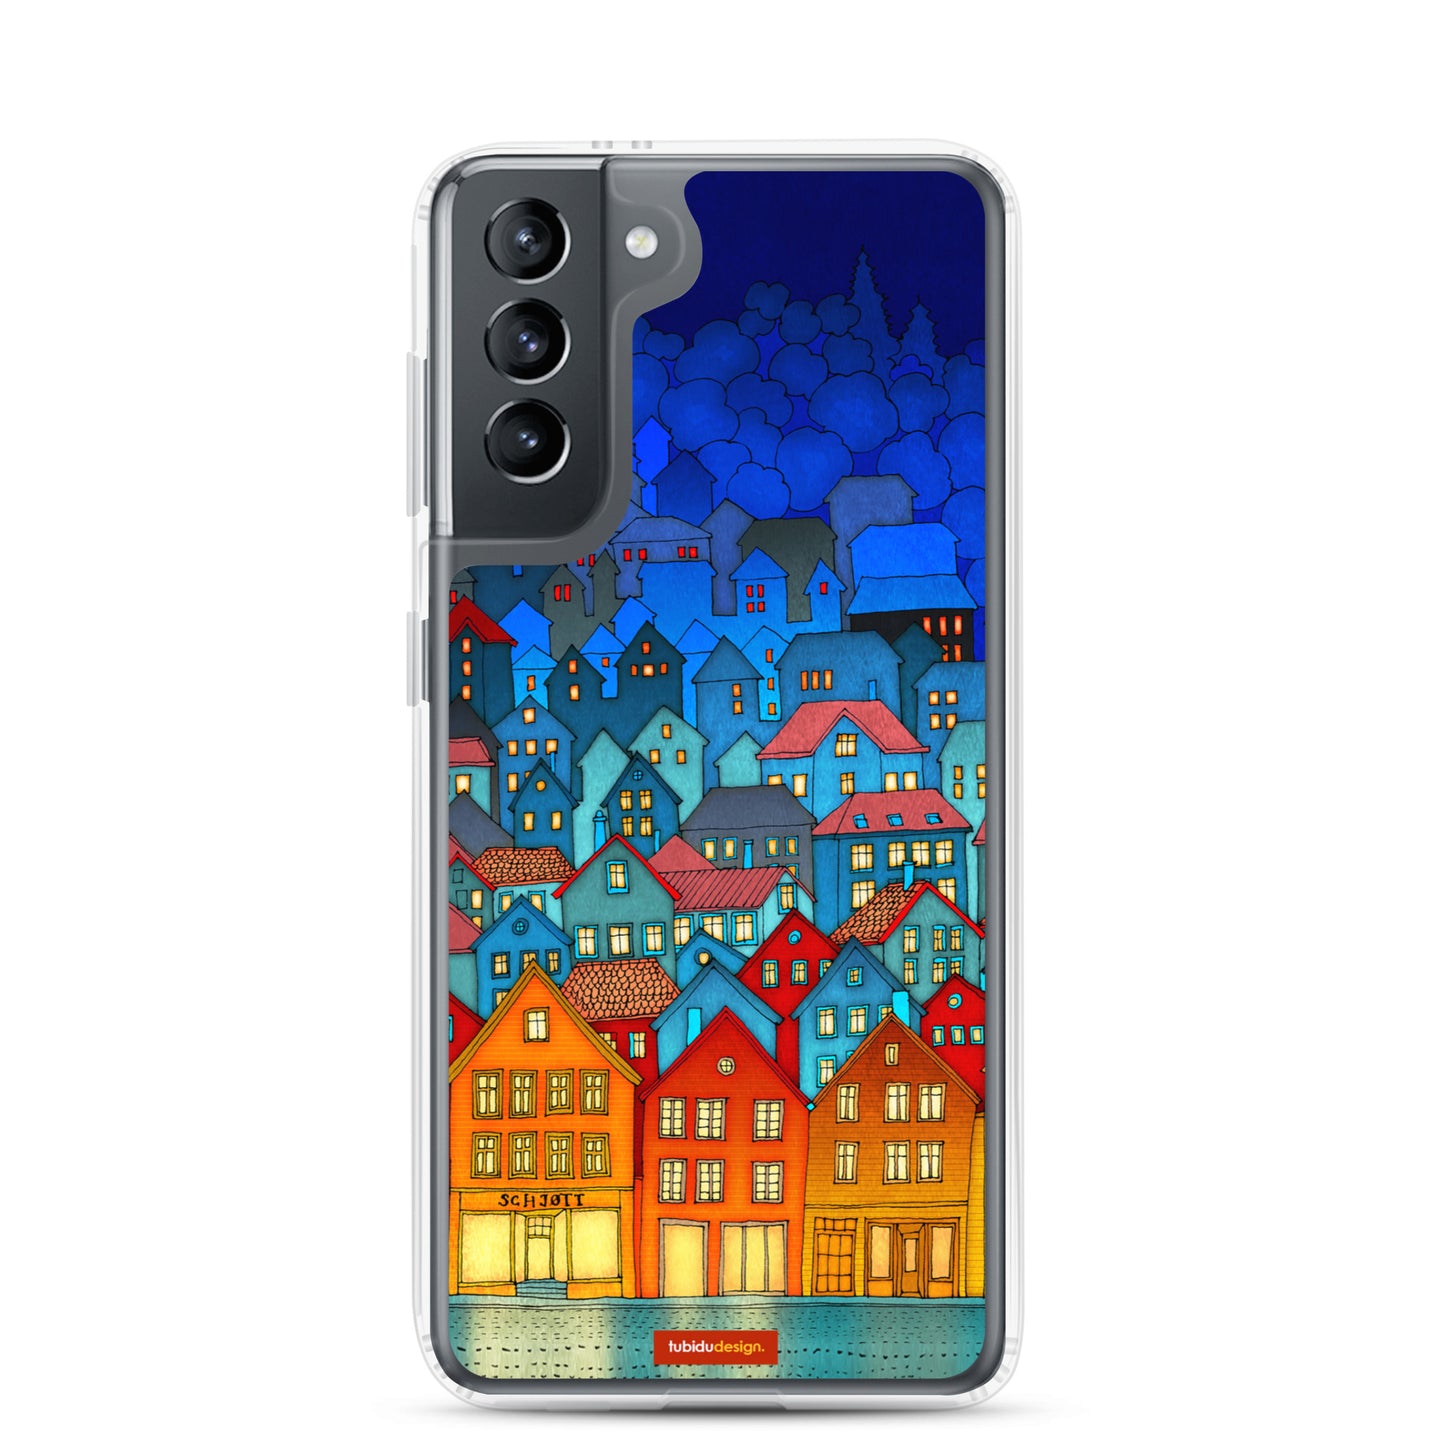 Norway, Bergen (blue) - Illustrated Samsung Phone Case